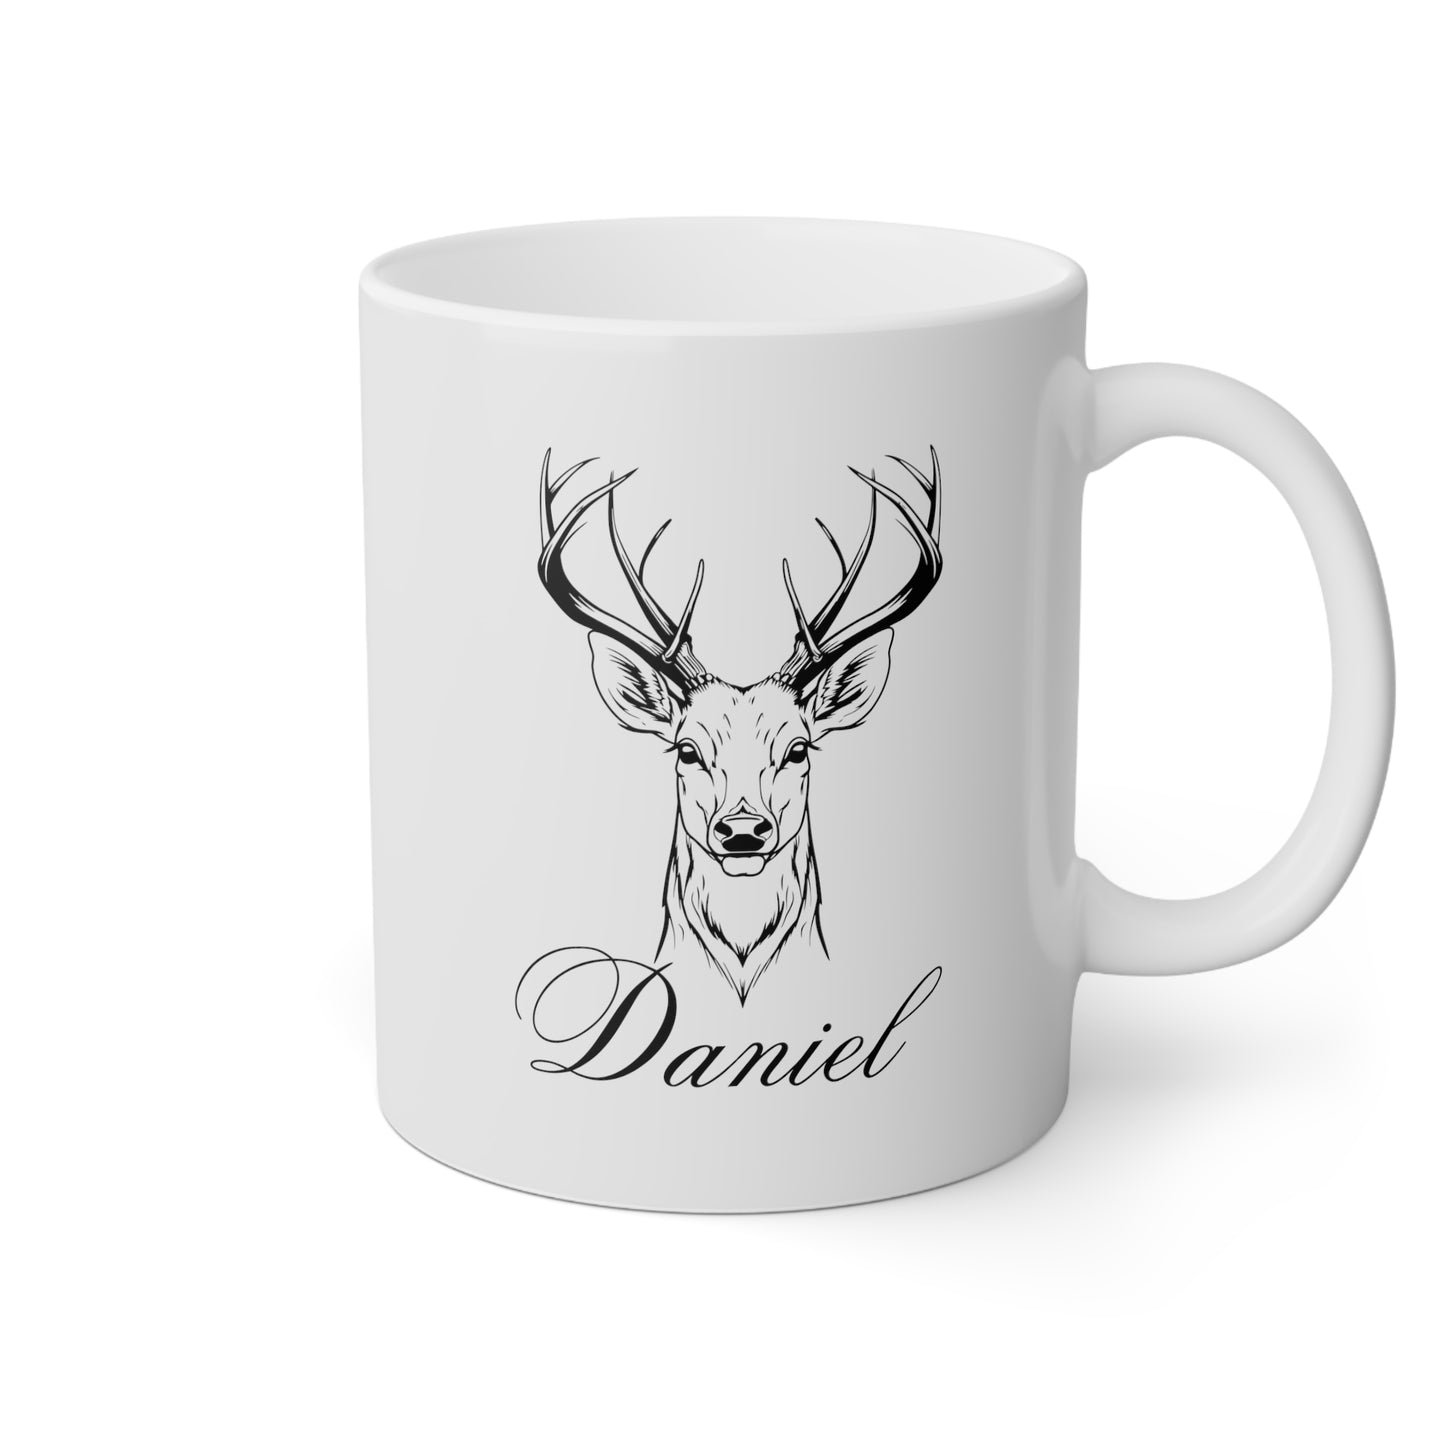 Reindeer Name 11oz white funny large coffee mug gift for deer hunter hunting wildlife lover custom name customize waveywares wavey wares wavywares wavy wares